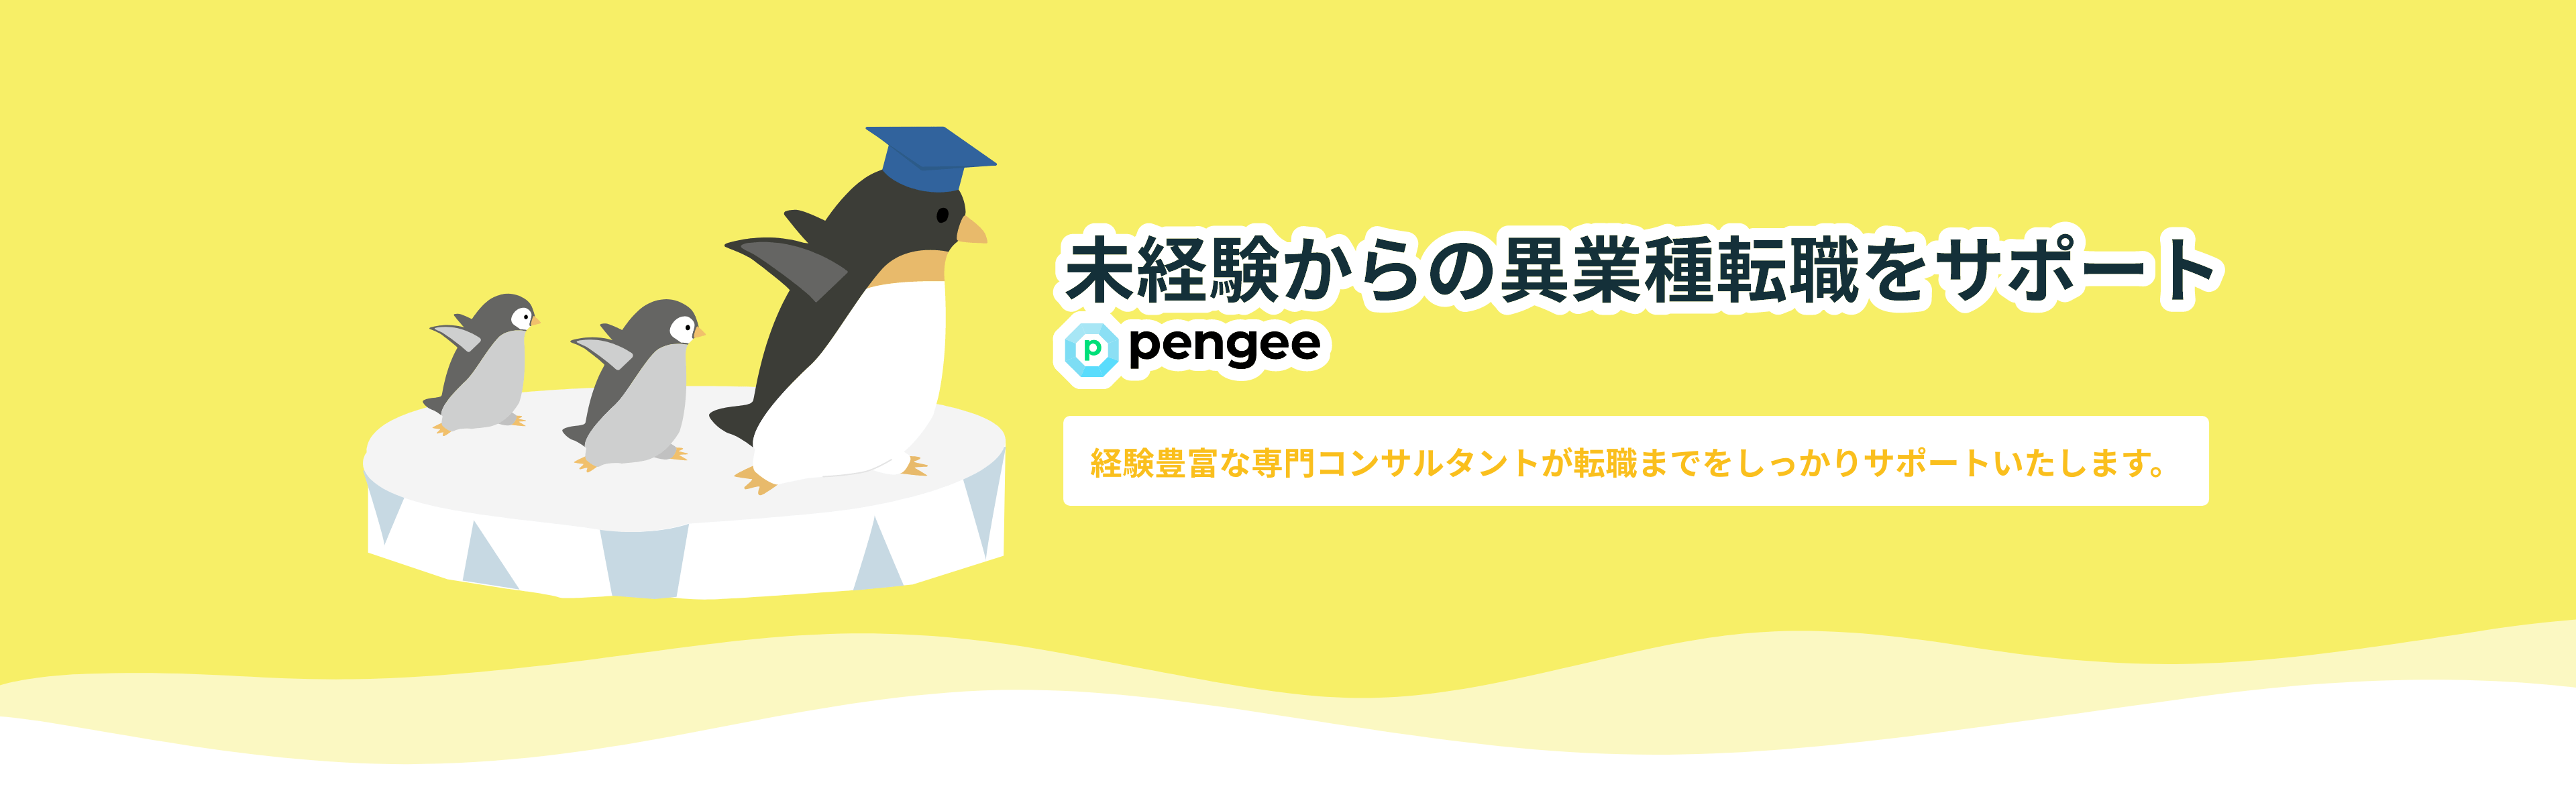 株式会社pengee